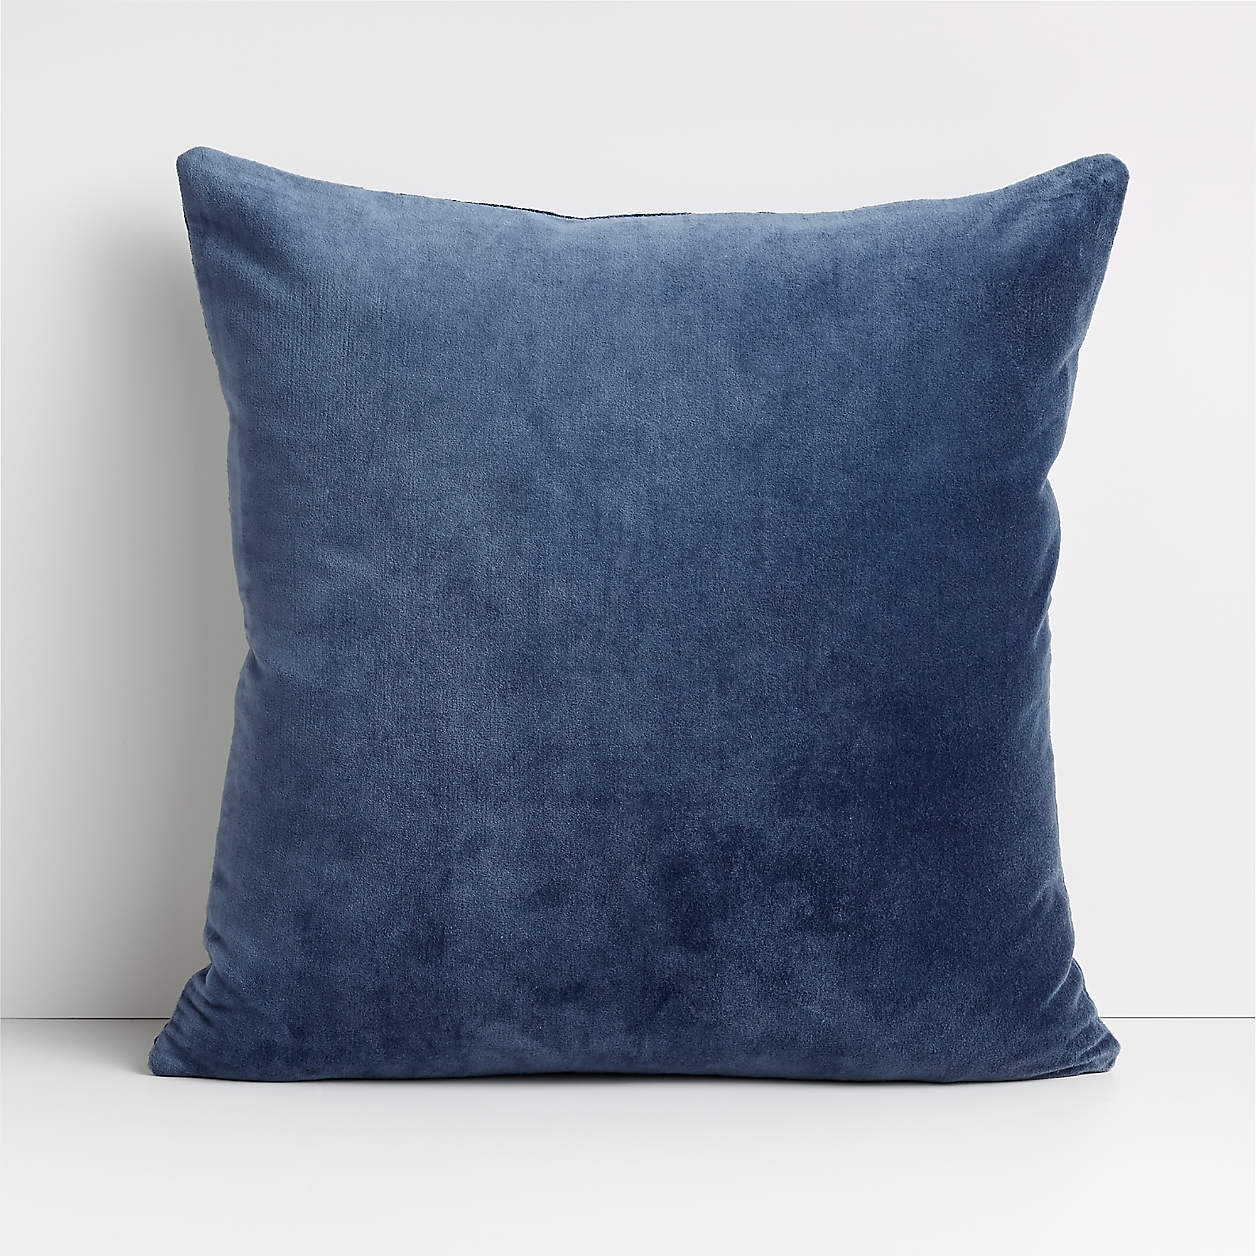 Blue 20"x20" Cotton Sari Silk Throw Pillow Cover - Image 3